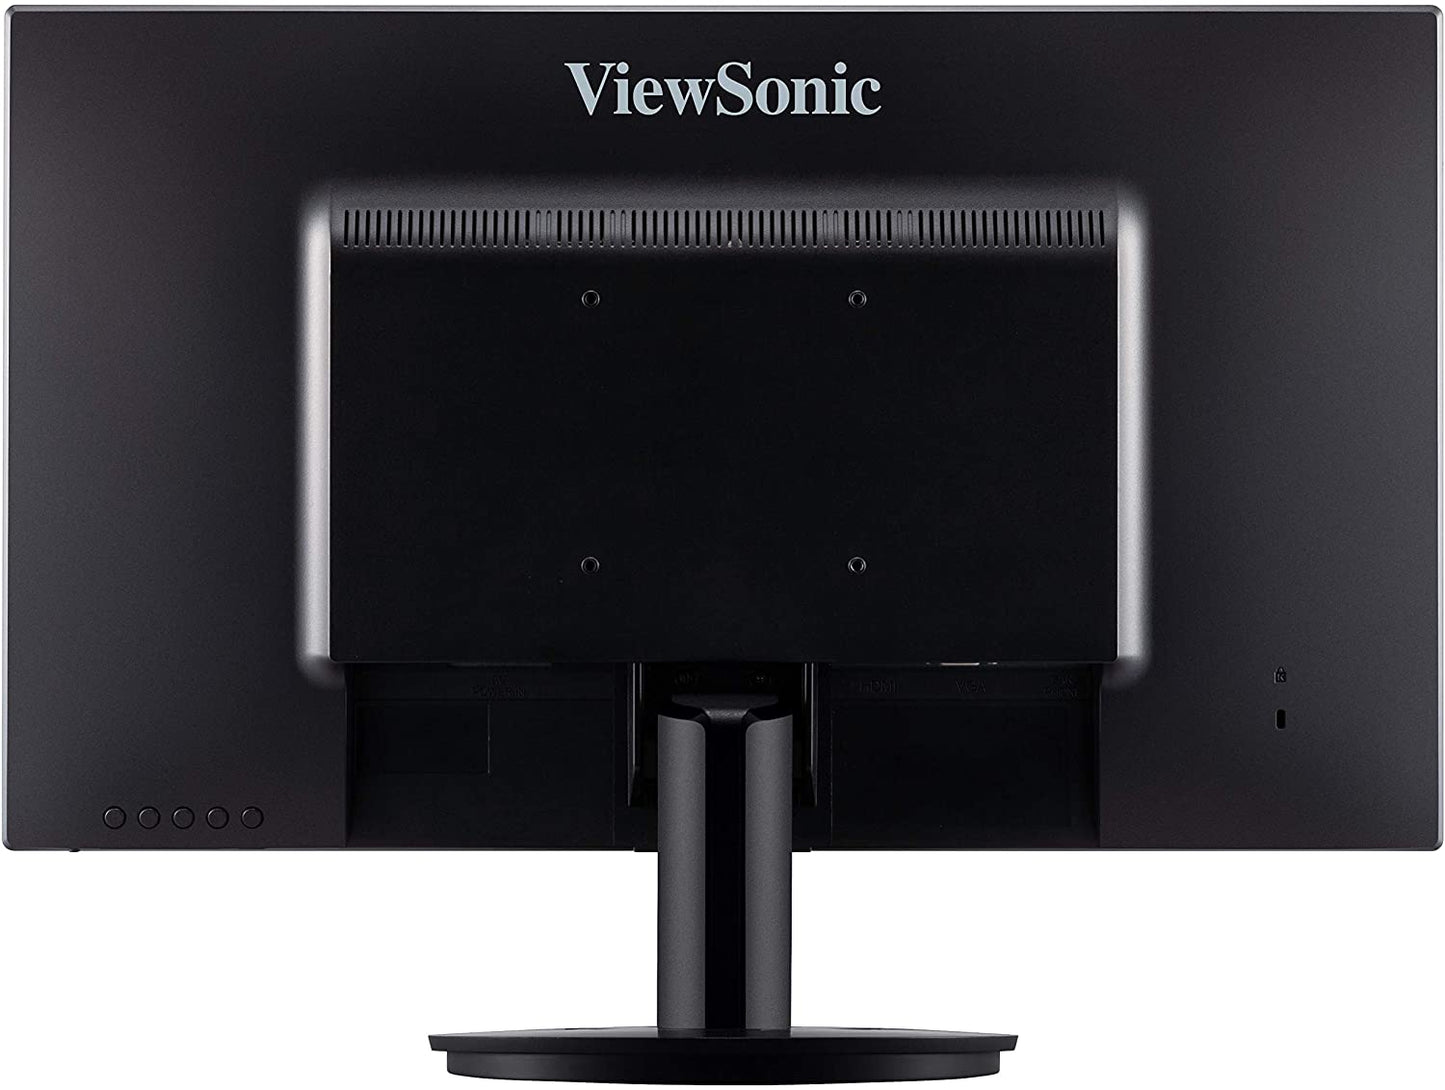 View sonic Monitor 24IN IPS HDMI VGA 1920X1080